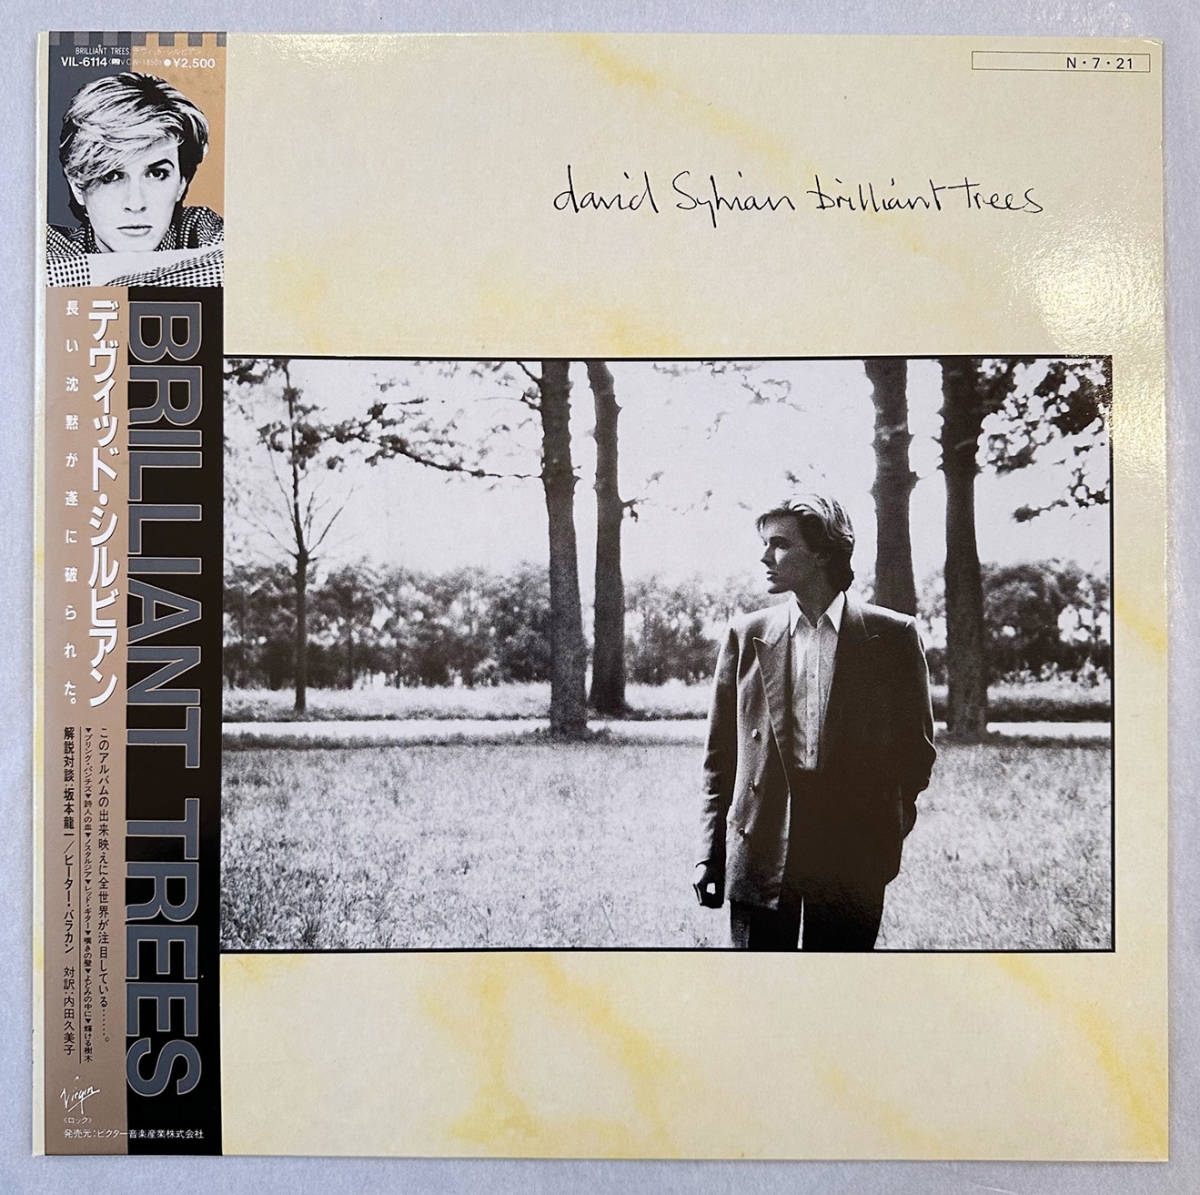 #1984 year domestic record original new goods David Sylvian - Brilliant Trees 12~LP VIL-6114 Virgin